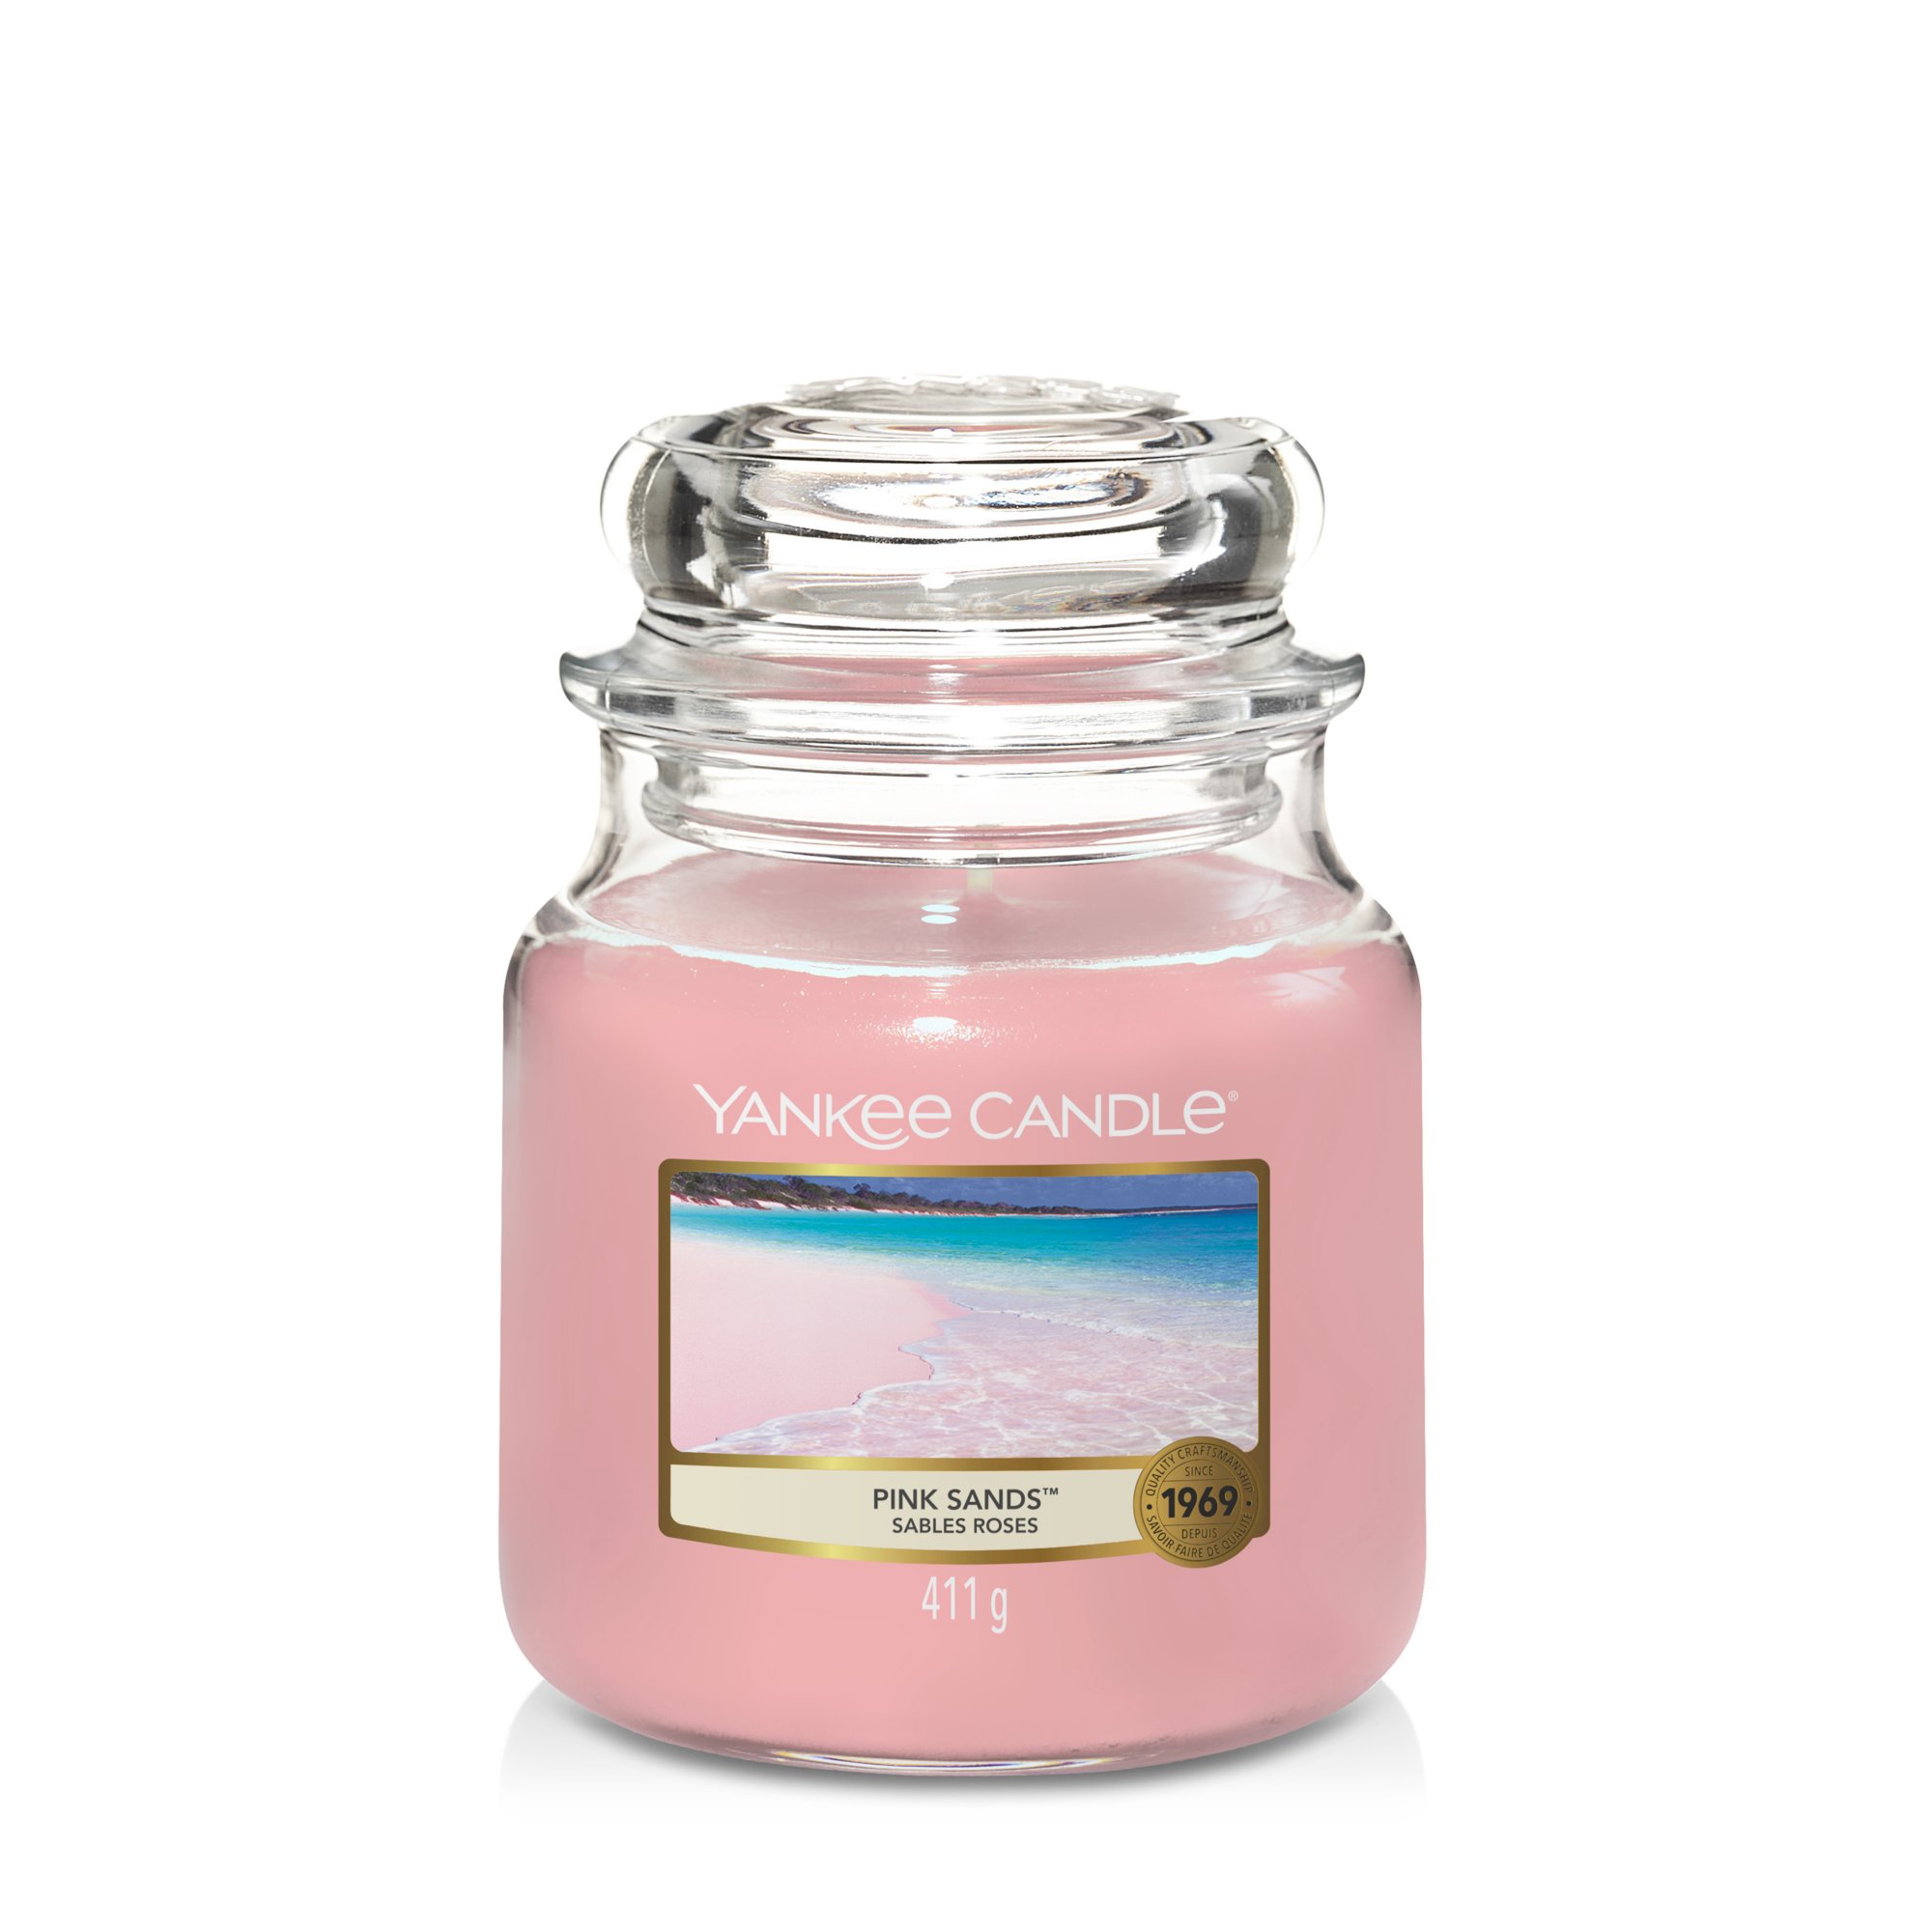 Yankee Candle - Pink Sands - Signature Large Jar